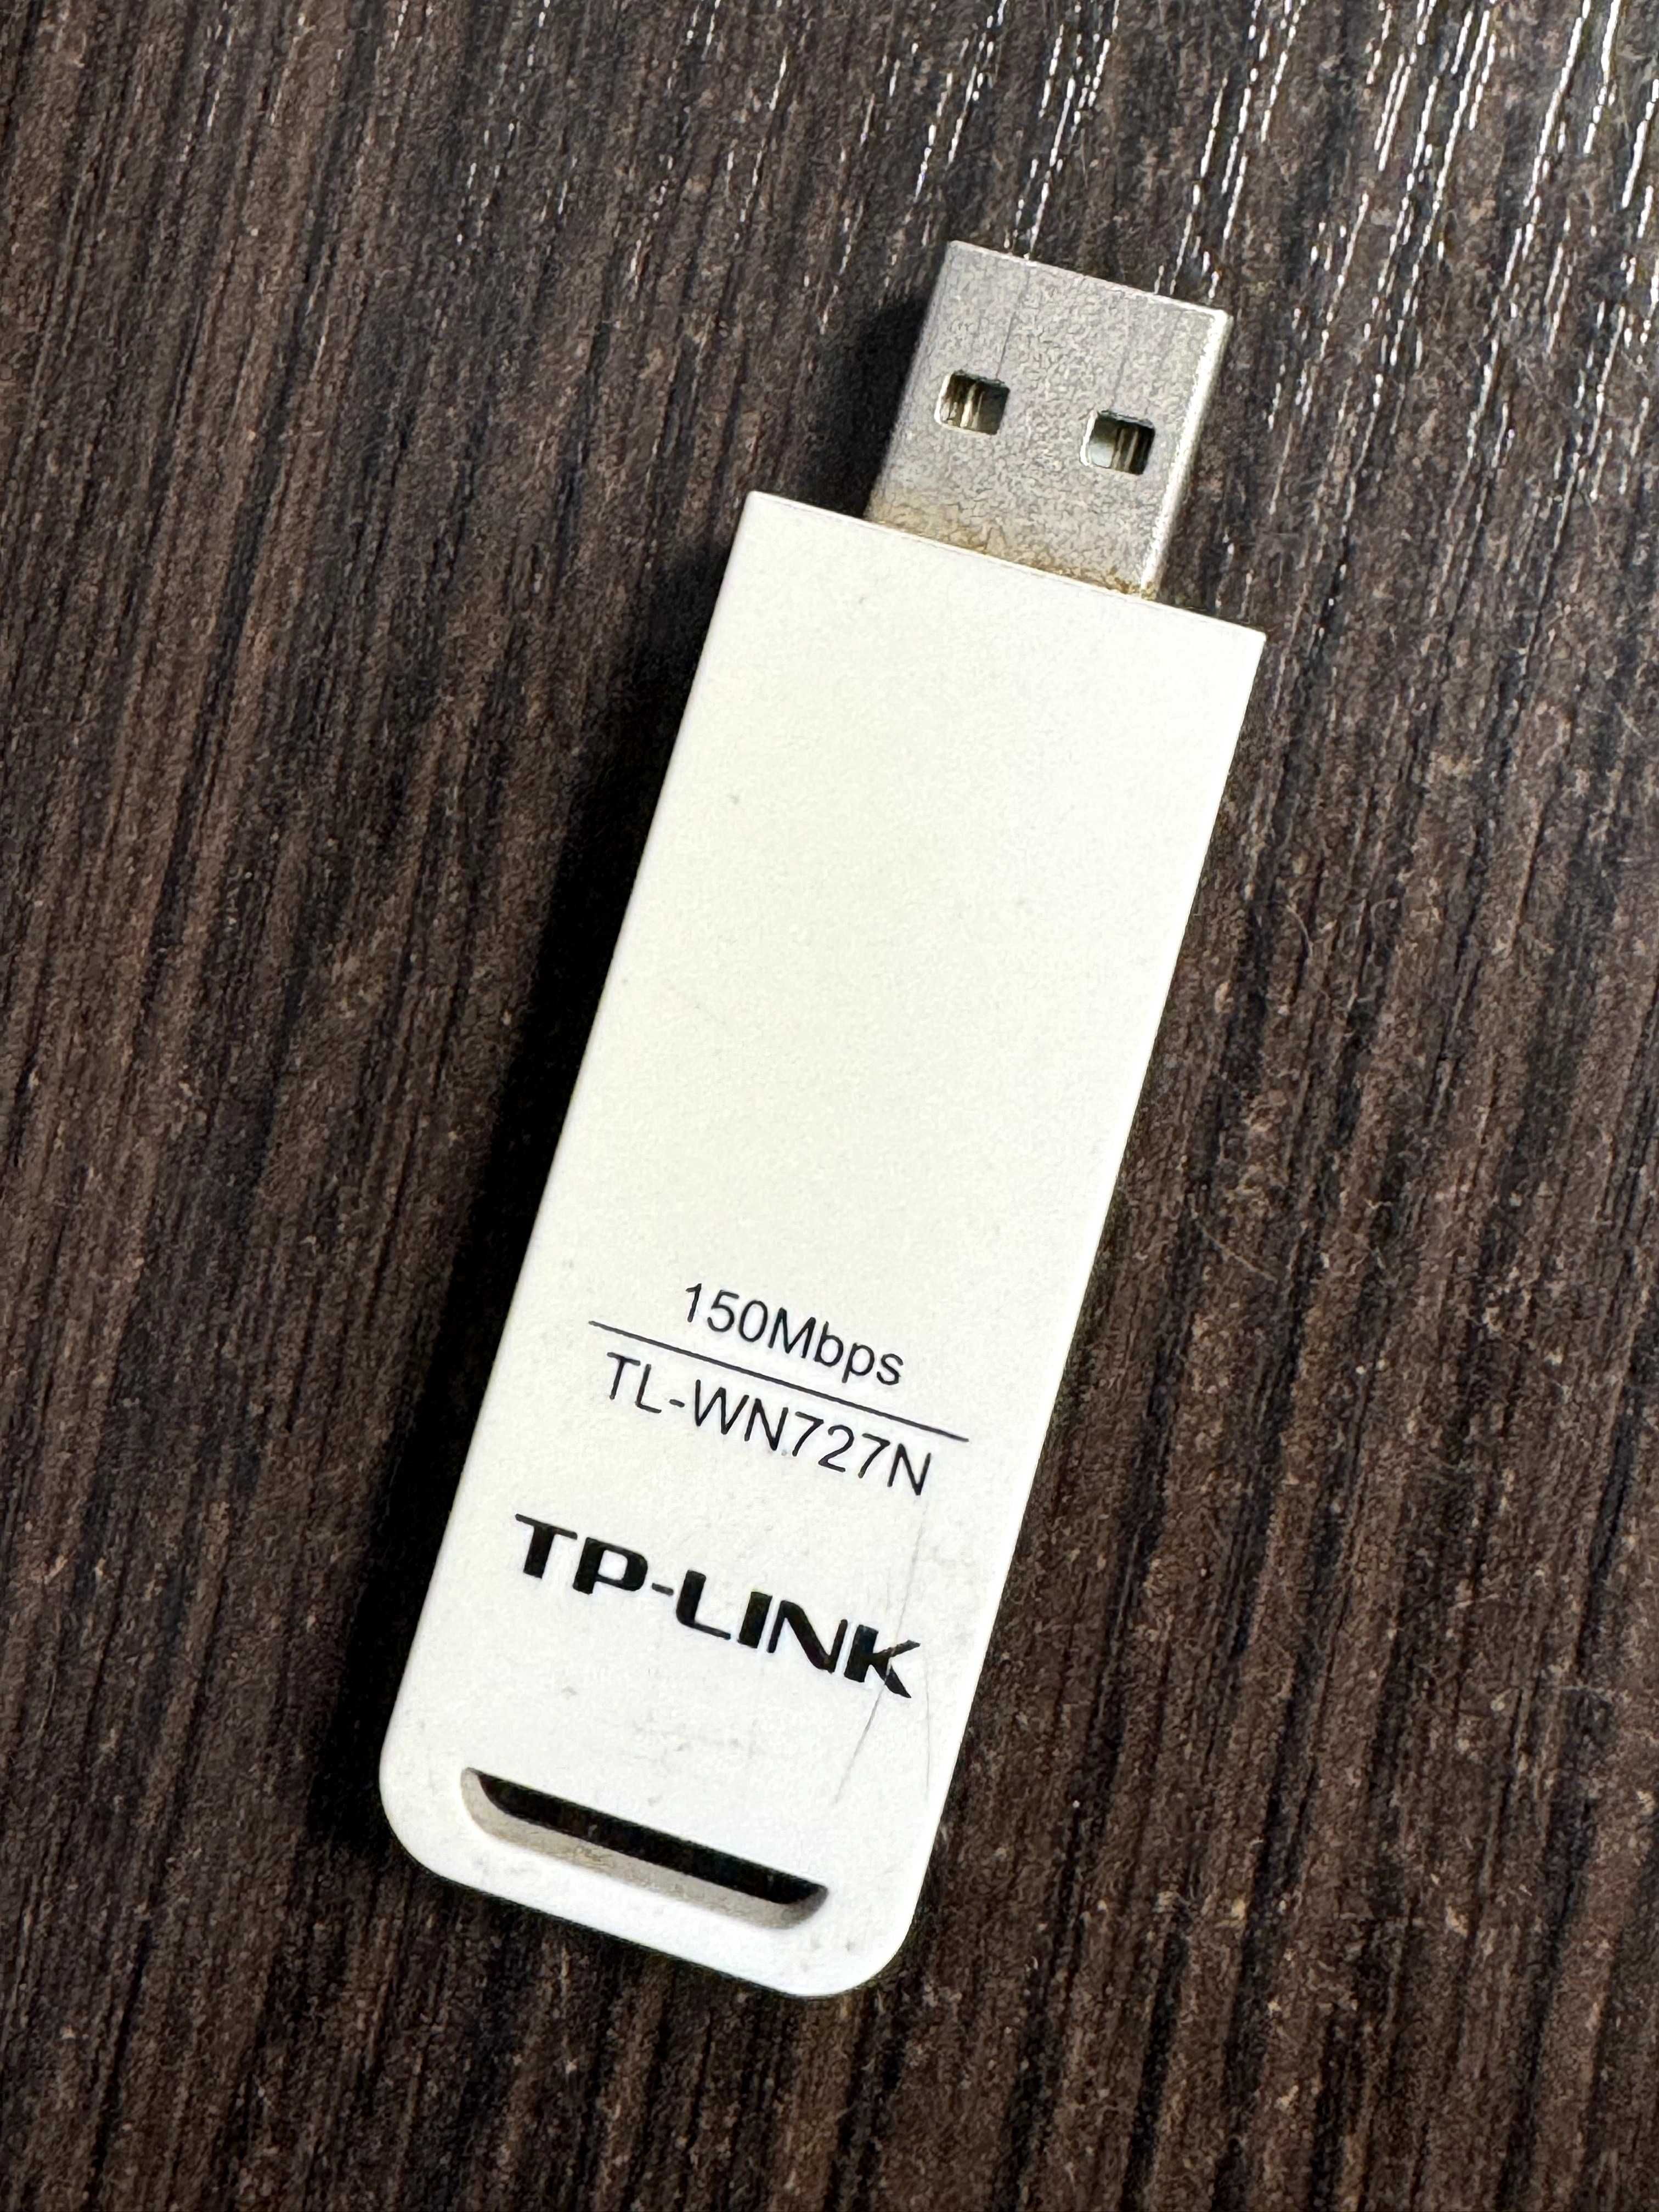 USB-адаптер мережі WiFi TP-Link TL-WN727N та Bluetooth